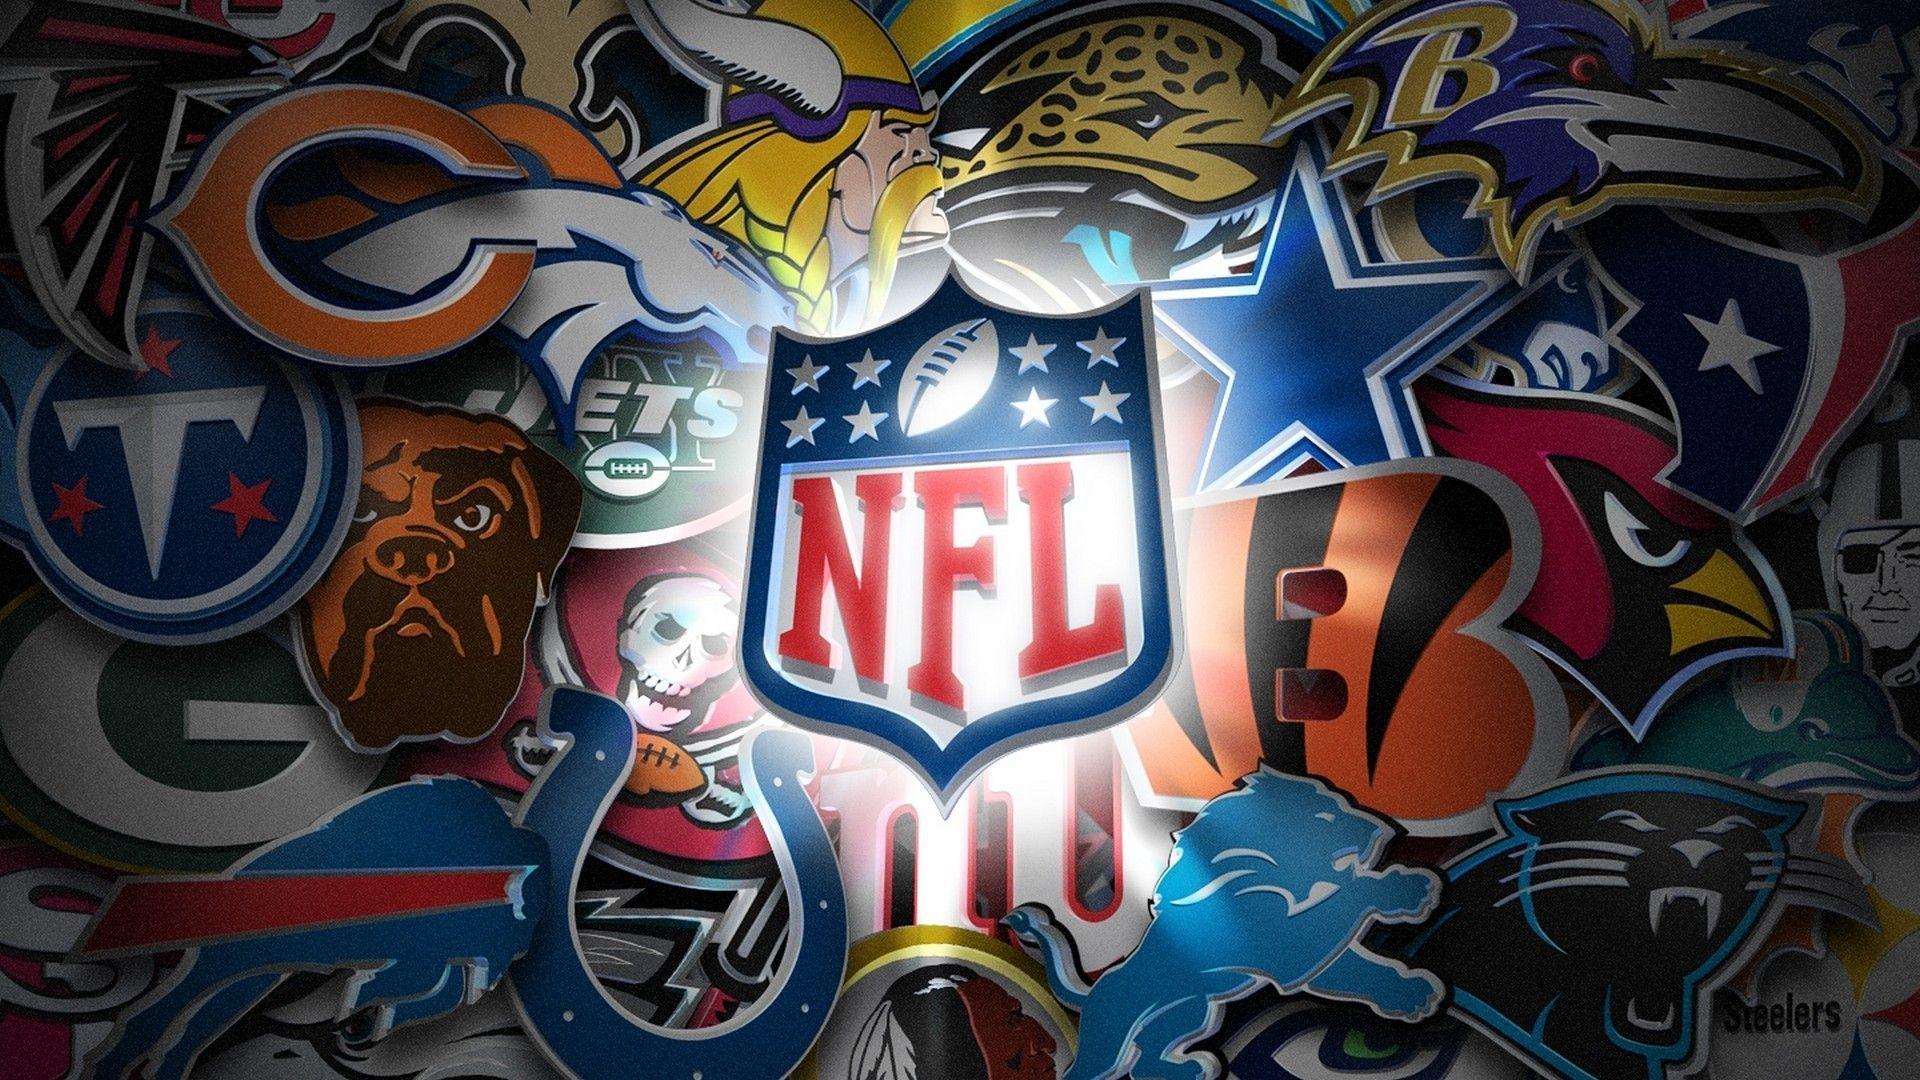 Cool NFL Logo - Cool NFL Mac Background. Wallpaper. NFL, Football, Fantasy football